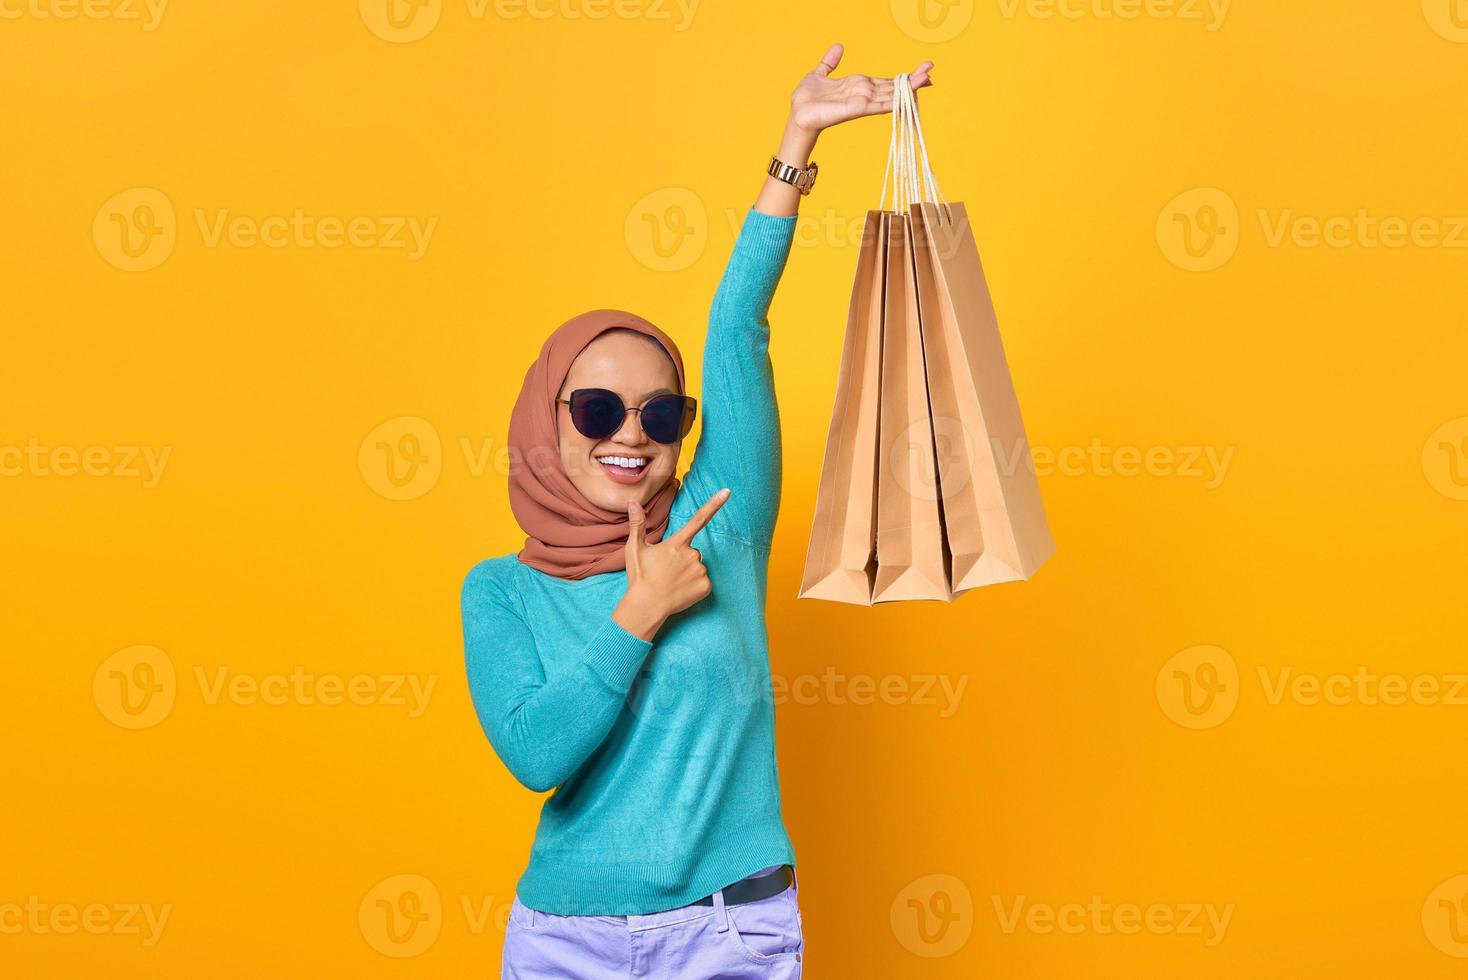 leende ung asiatisk kvinna pekar fingrar på shoppingkassar på gul bakgrund foto